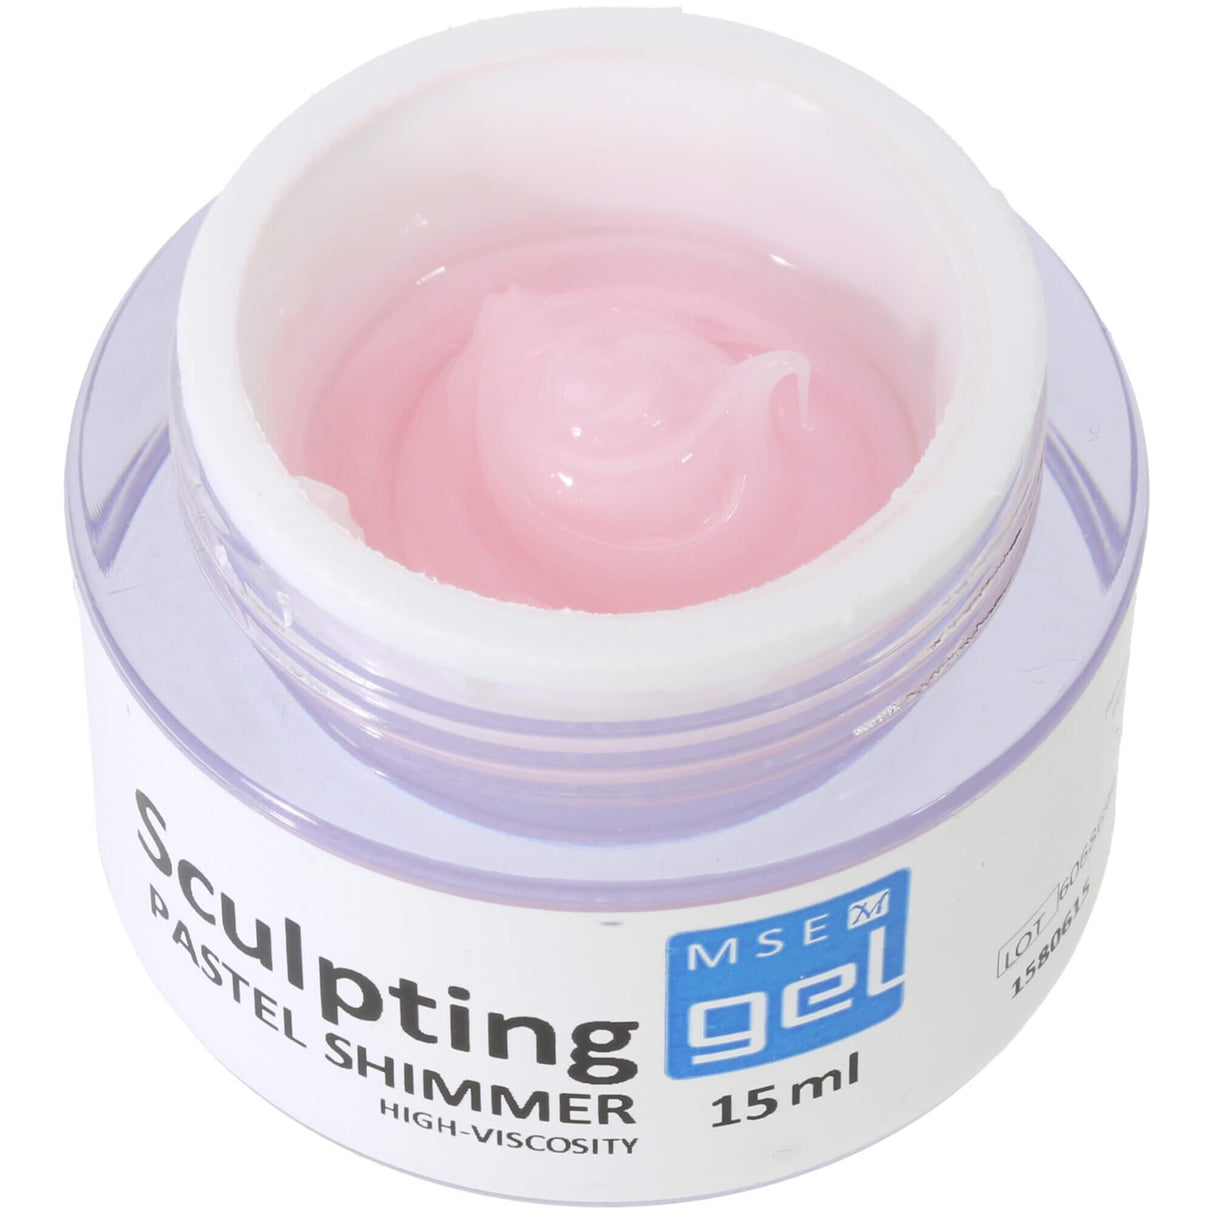 MSE Gel 806: Schablonen Gel pastell shimmer hochviskose / Sculpting pastel shimmer high-viscosity 15ml - MSE - The Beauty Company